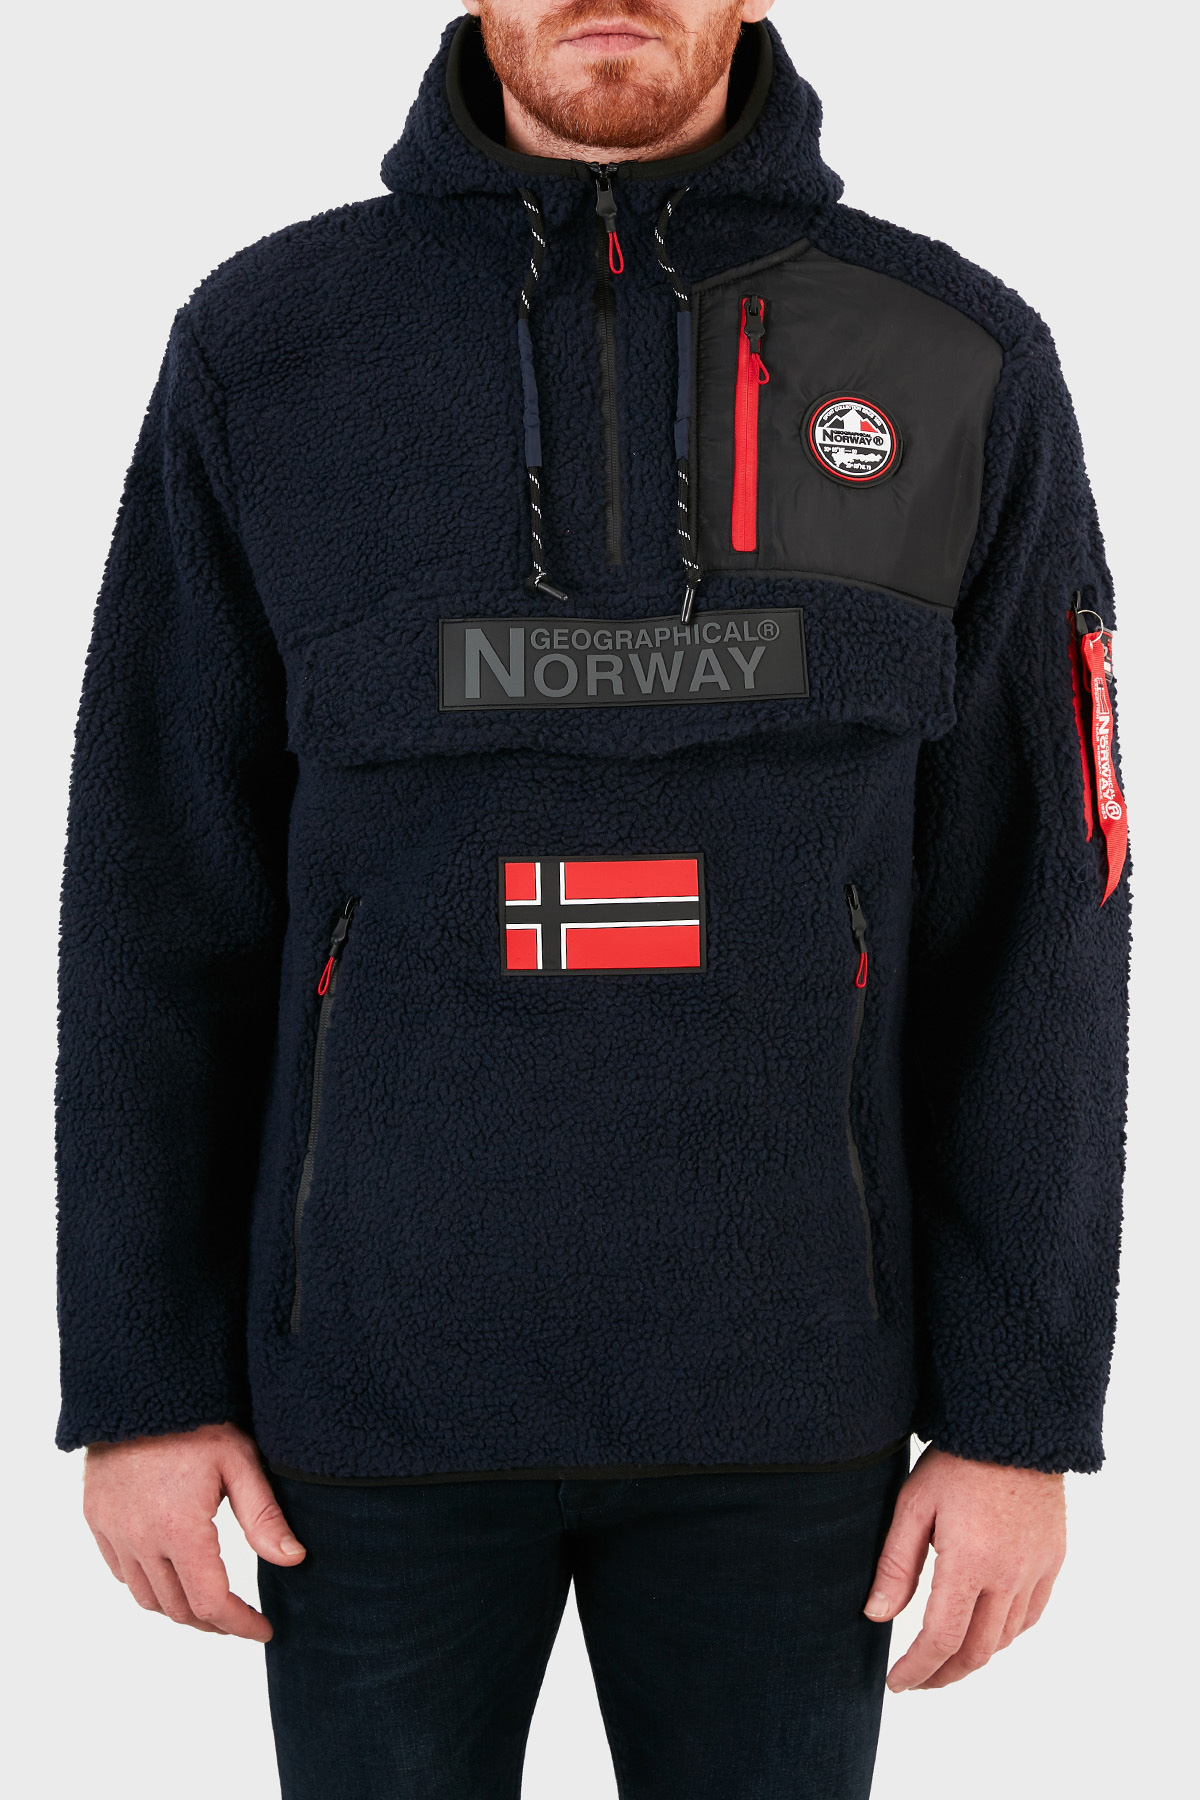 Norway Geographical Sweashirt